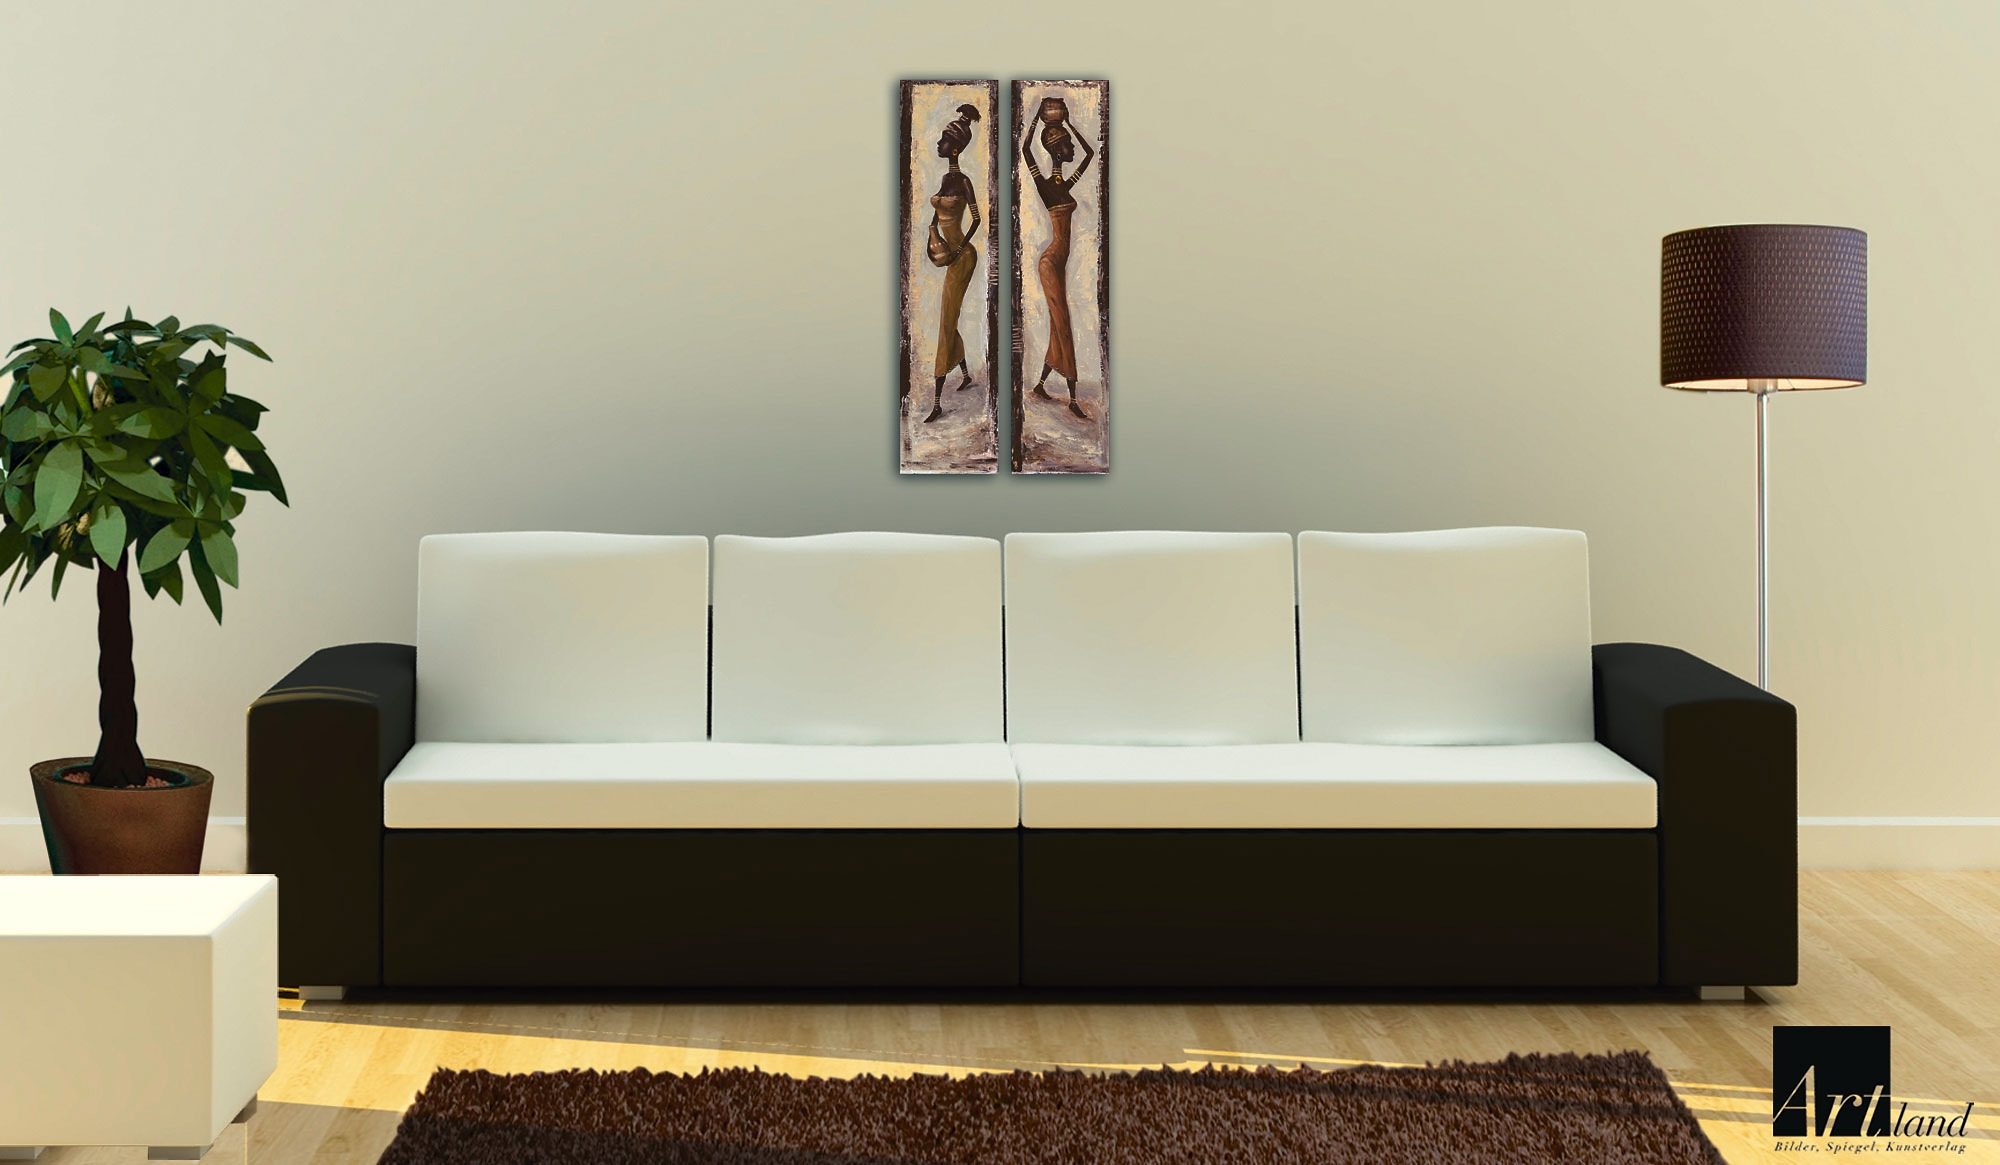 Home affaire Kunstdruck »A. S.: African woman I + II«, (Set), 2x 19/74 cm-HomeTrends